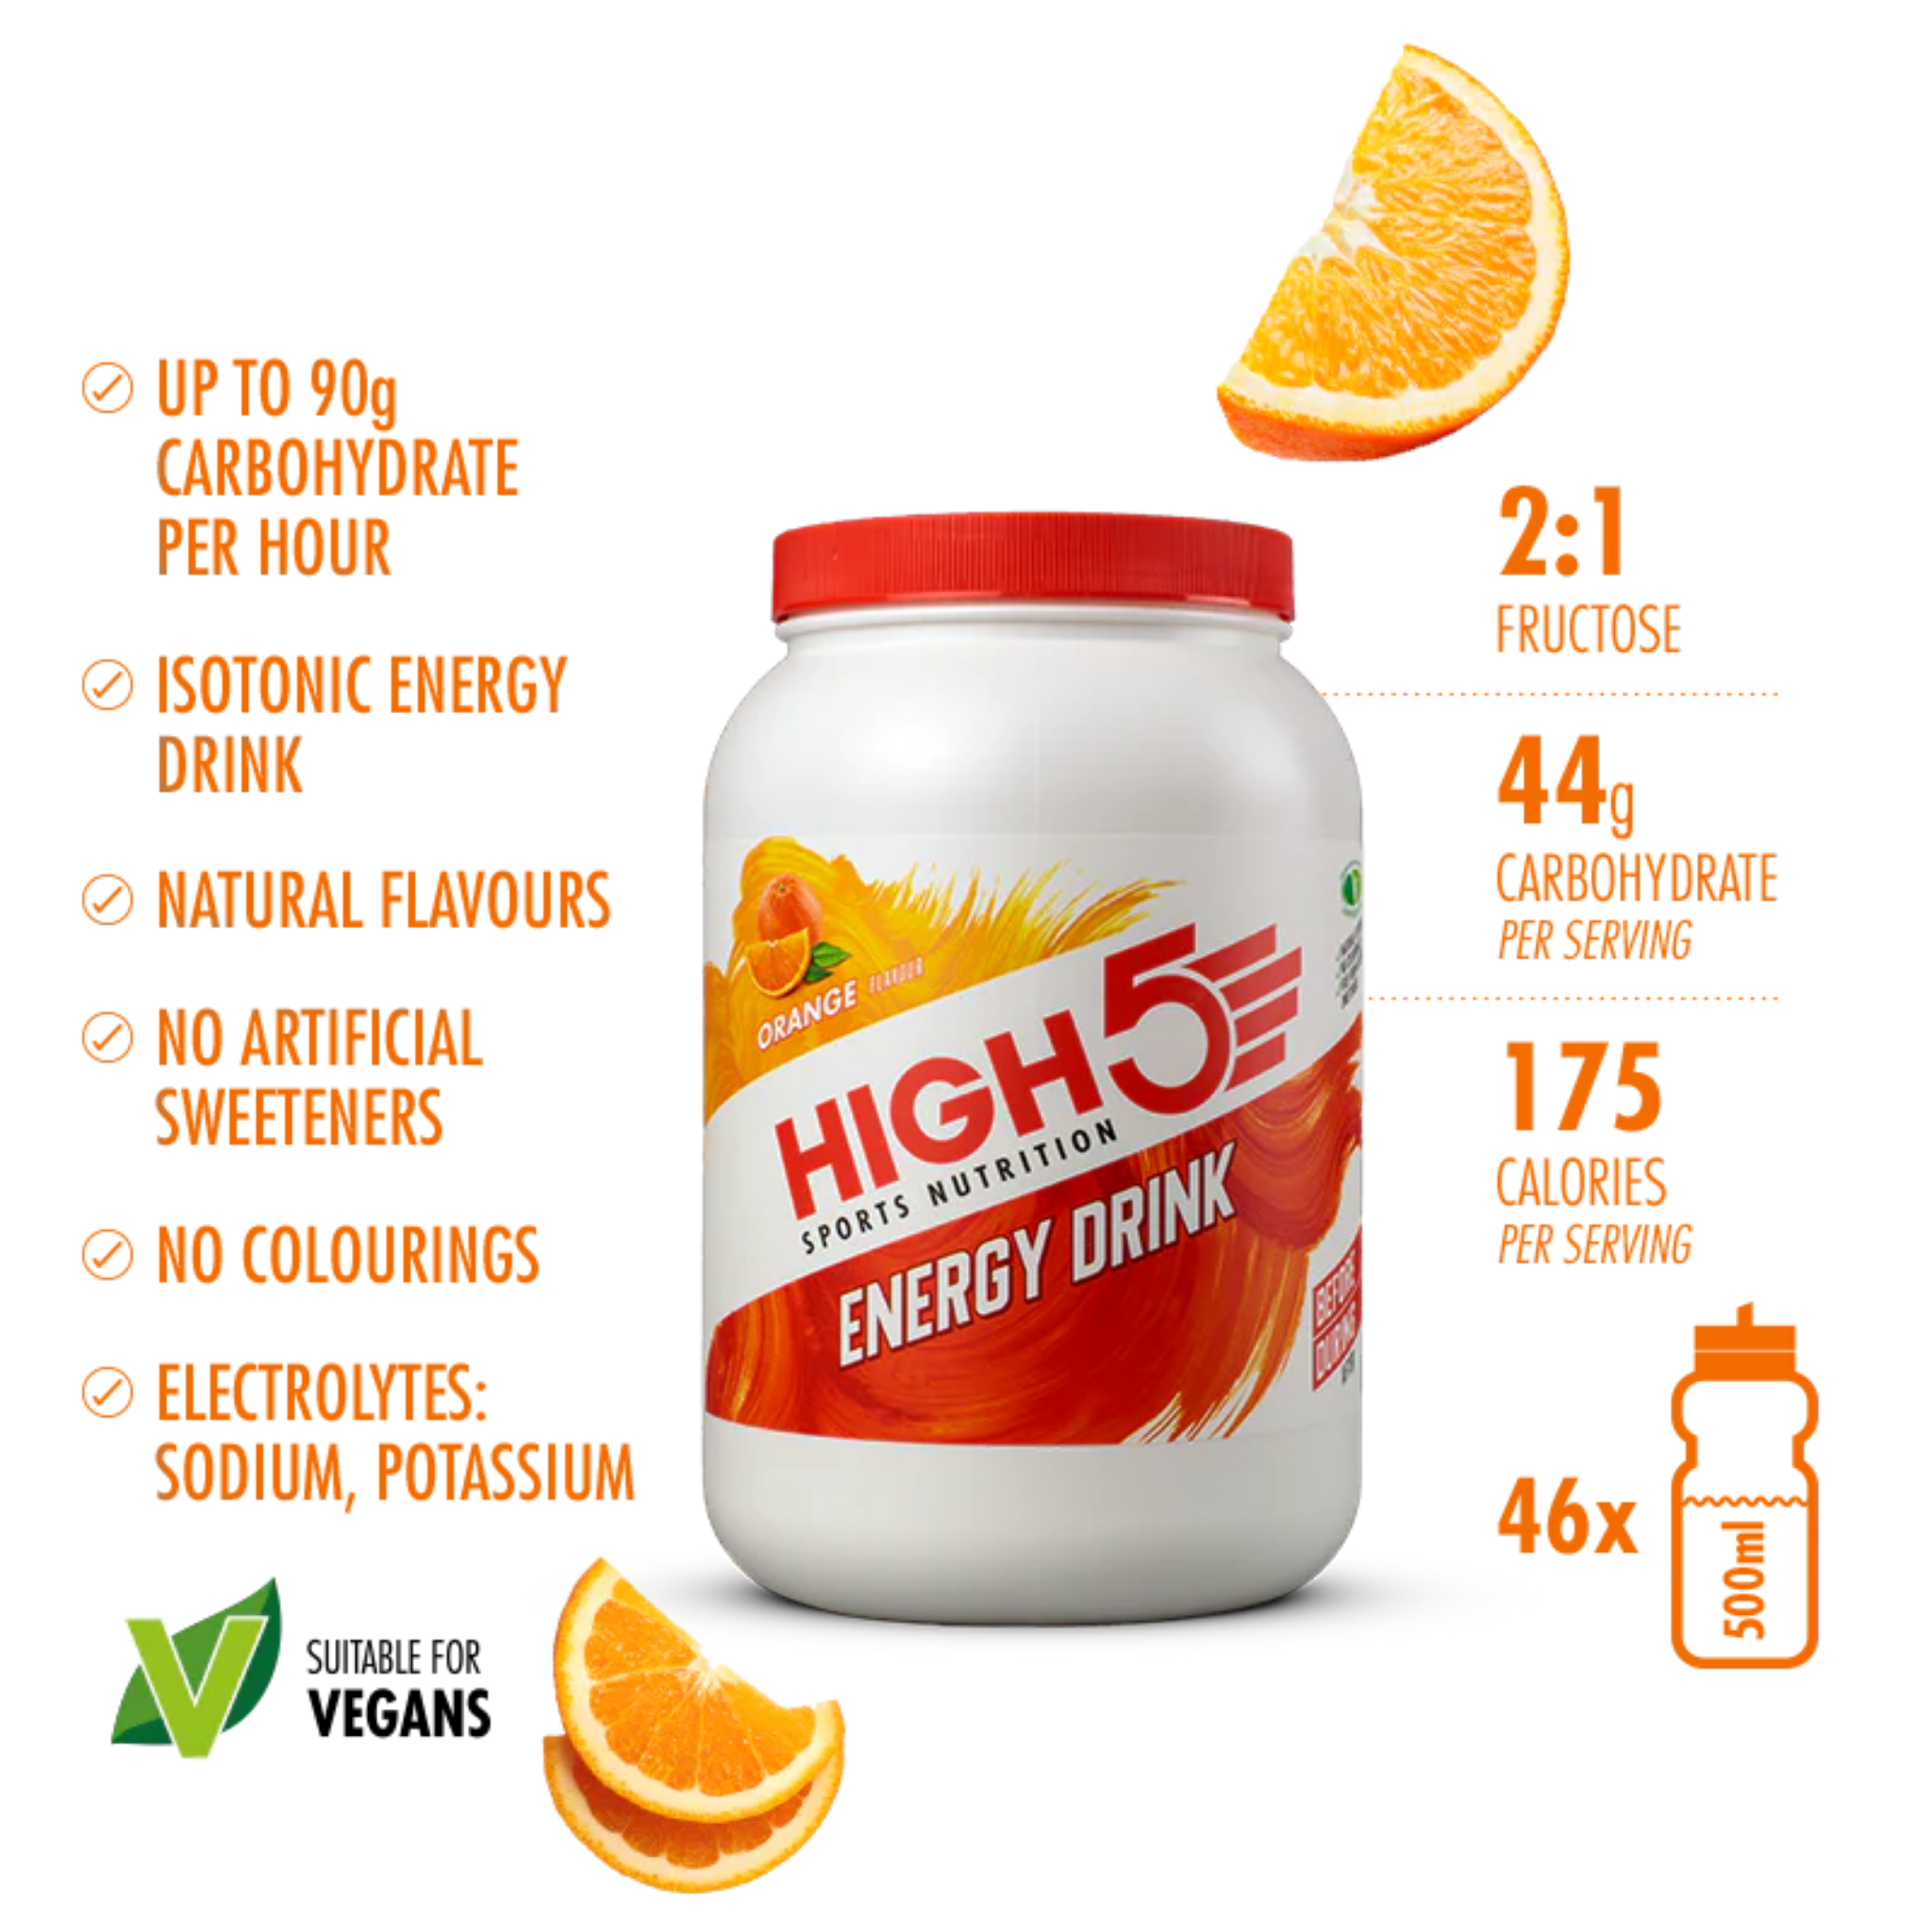 High5 Energidrik Orange (2.2 kg)